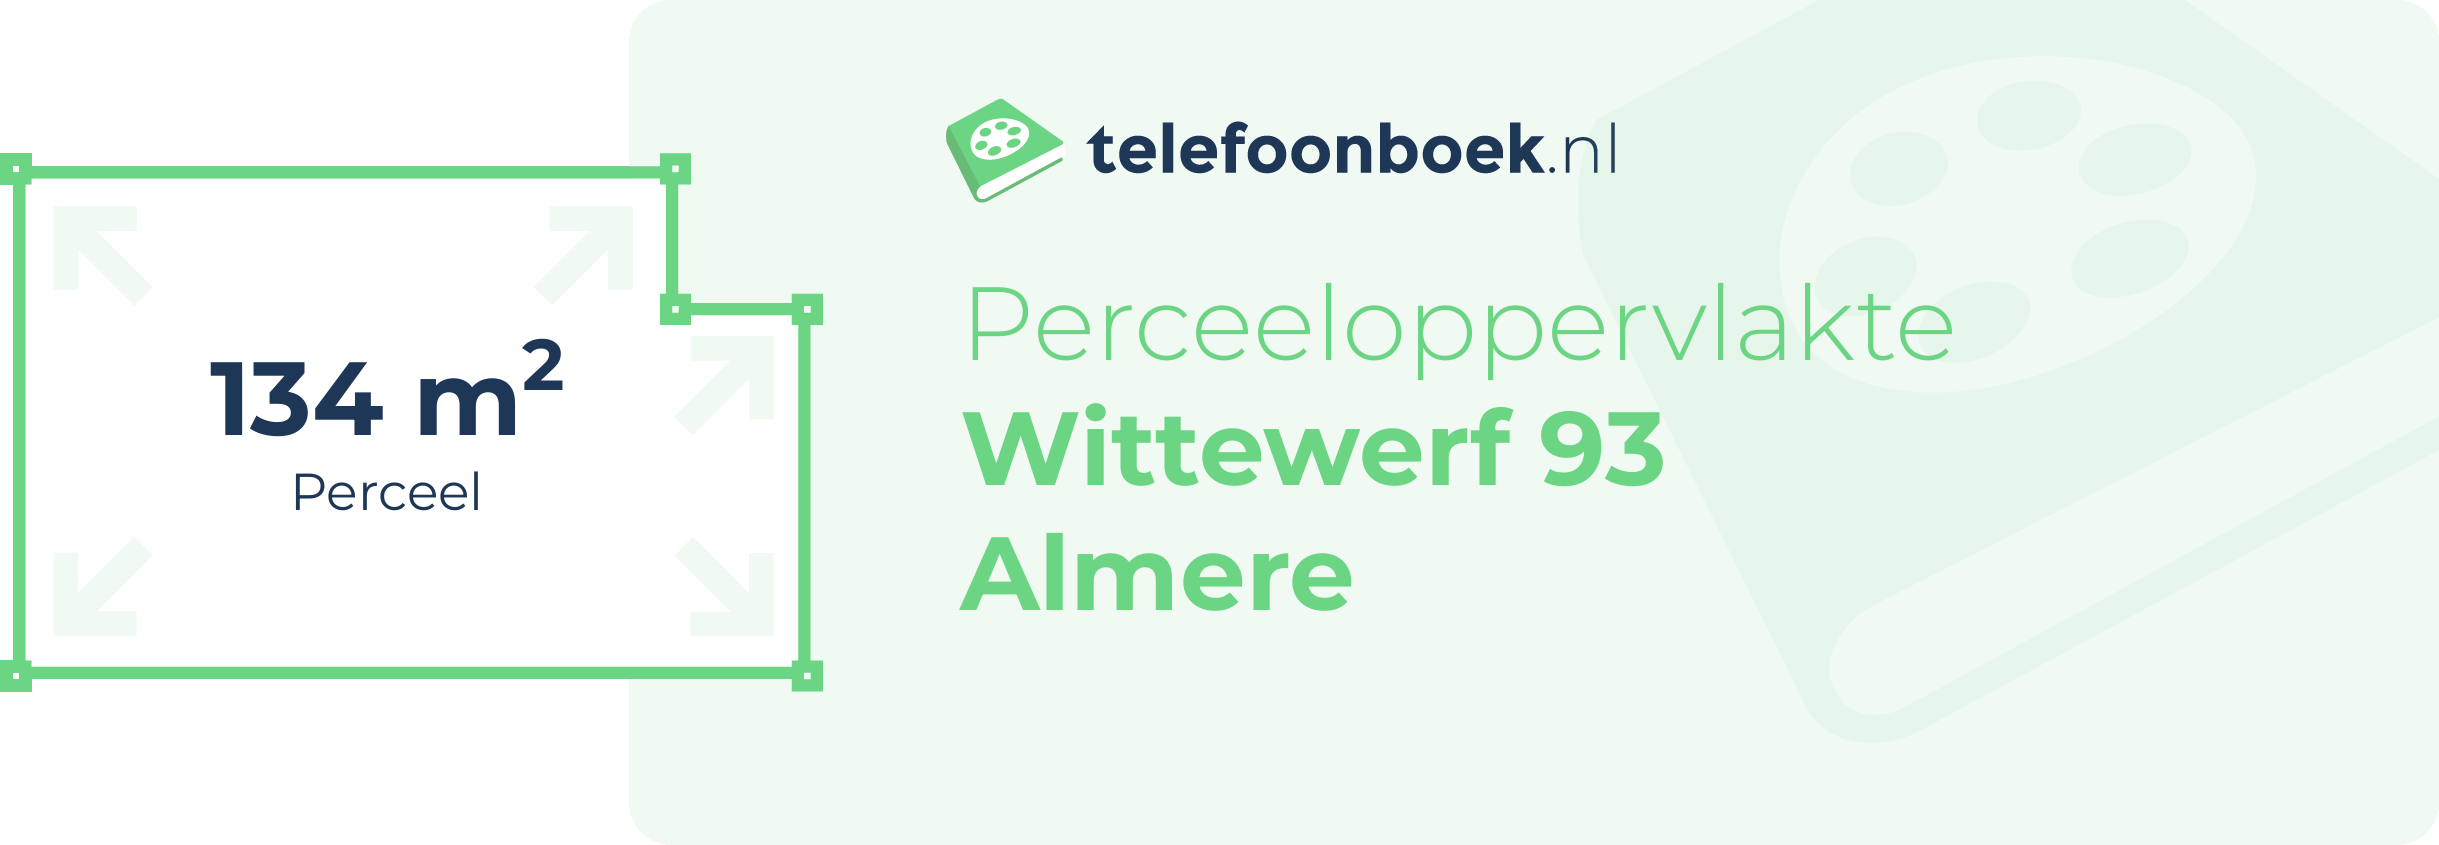 Perceeloppervlakte Wittewerf 93 Almere